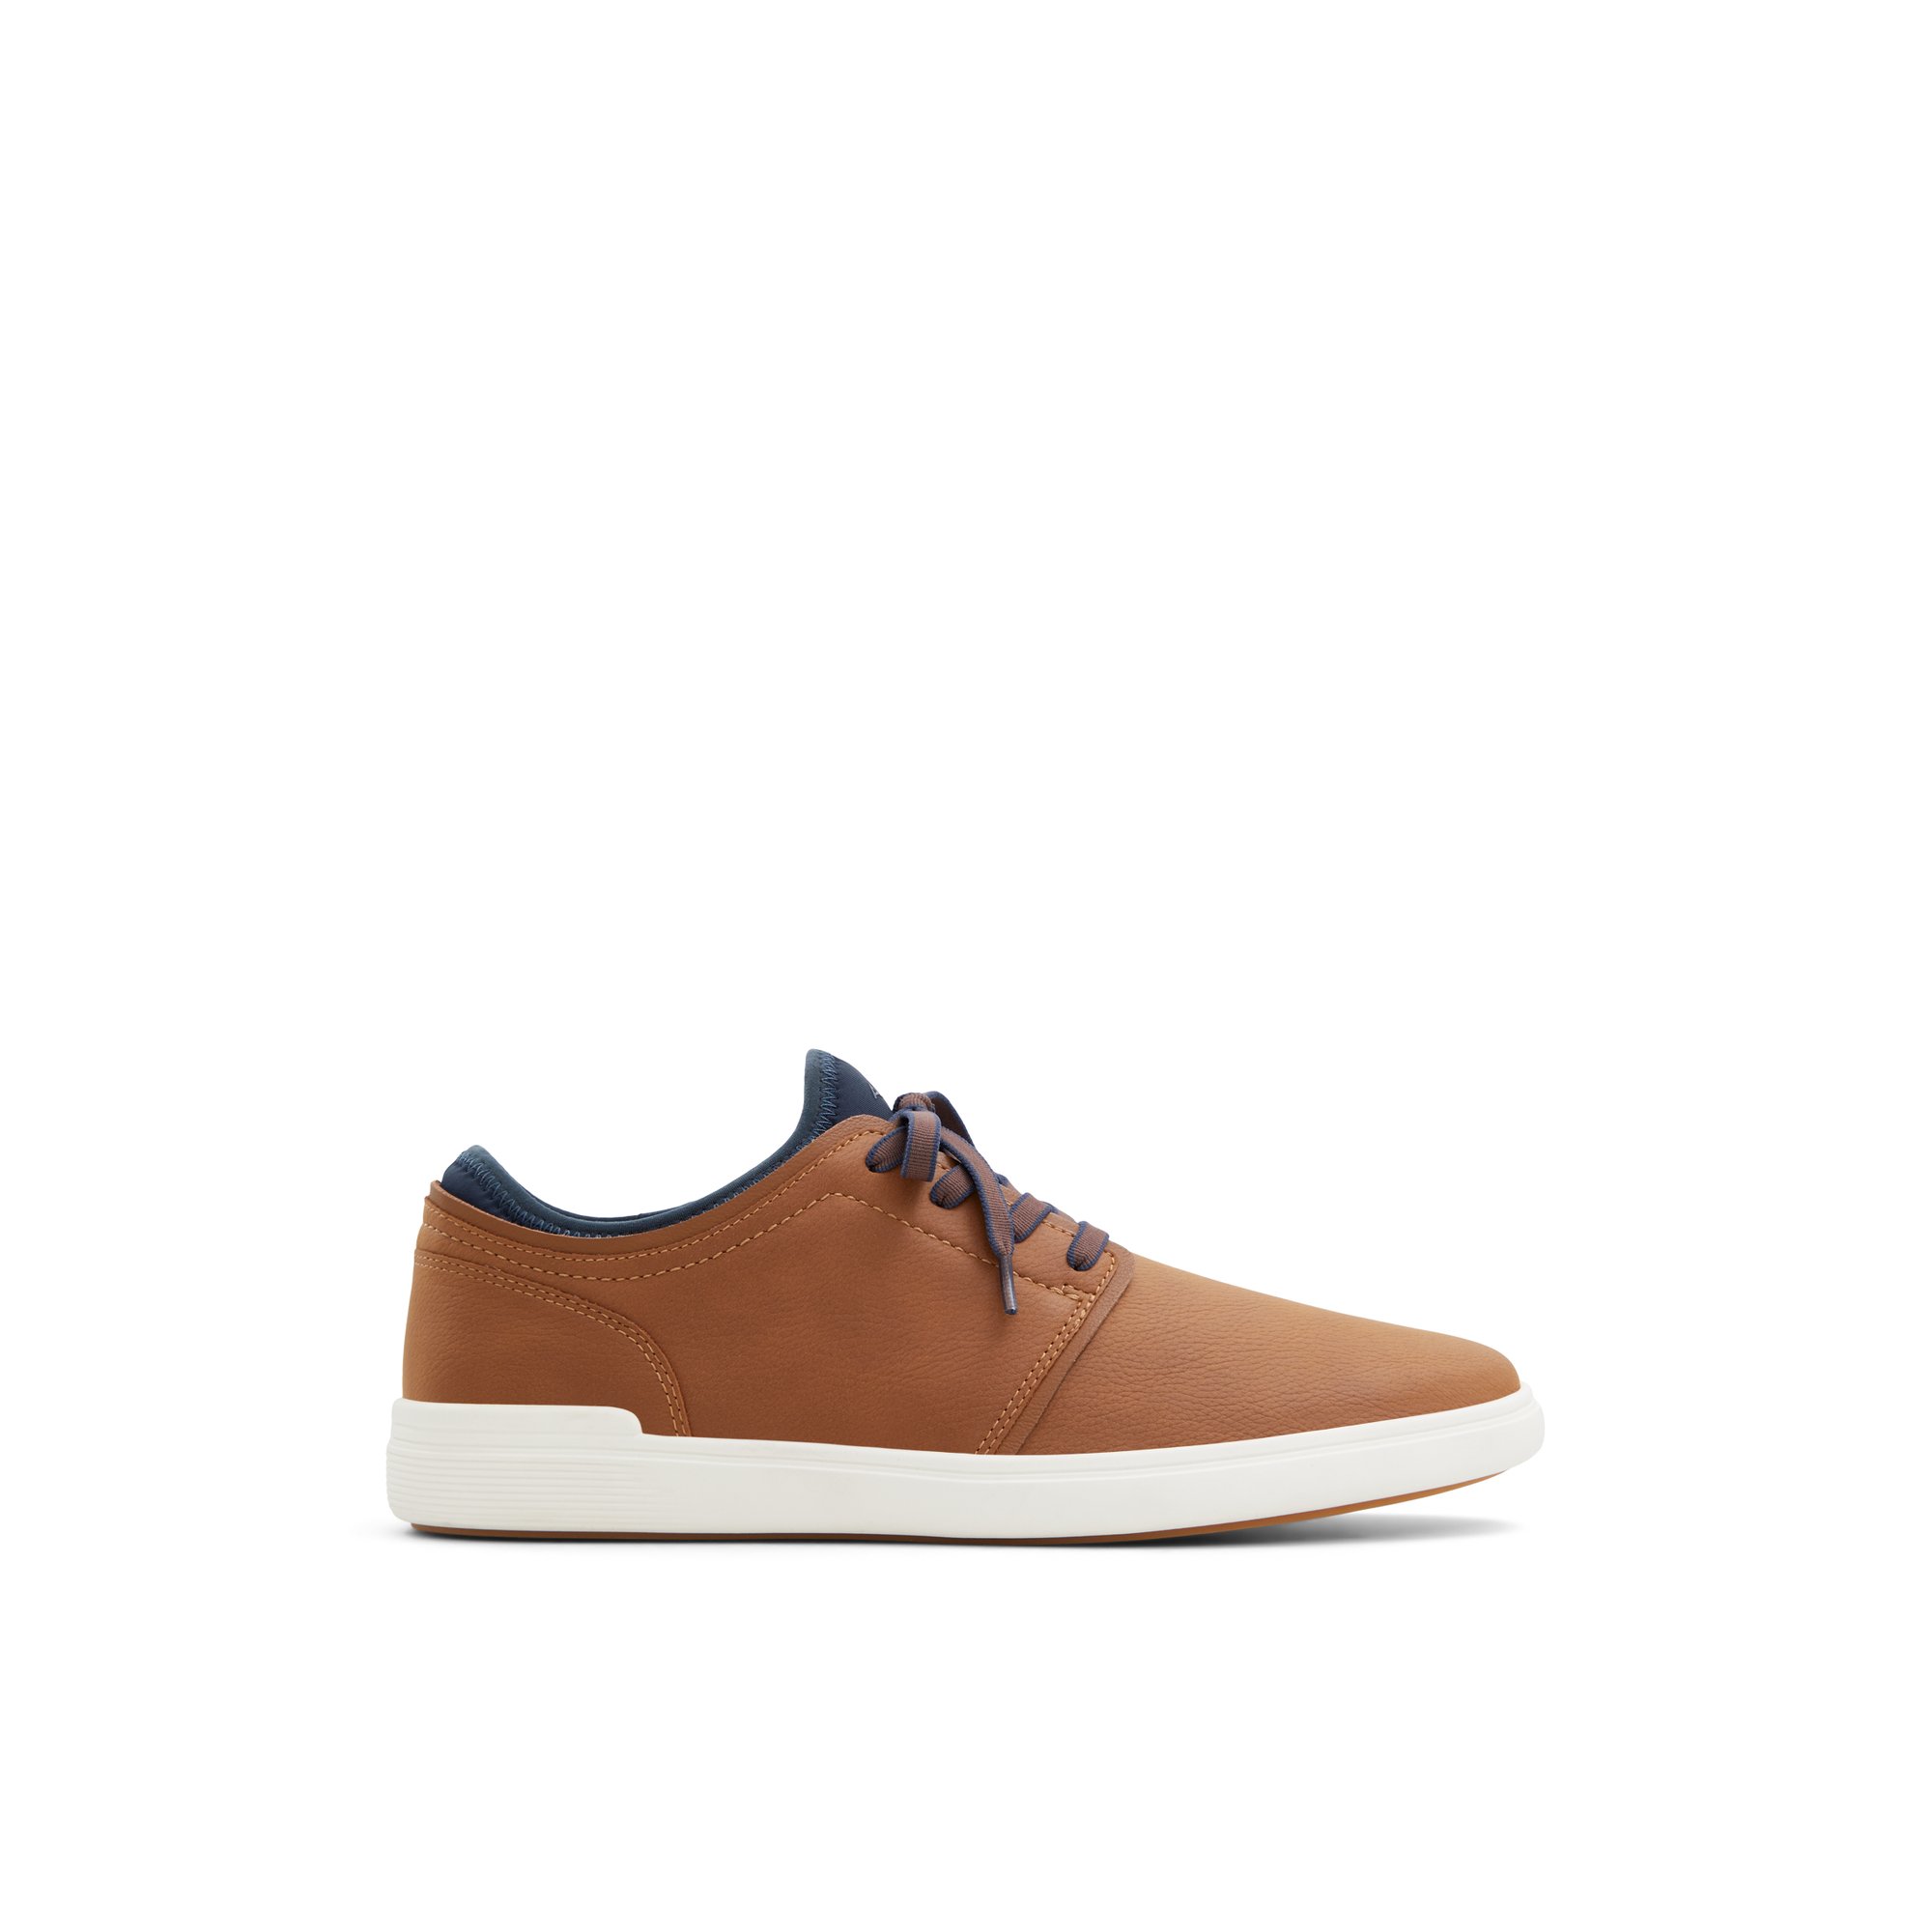 ALDO Omono - Men's Low Top Sneakers - Brown